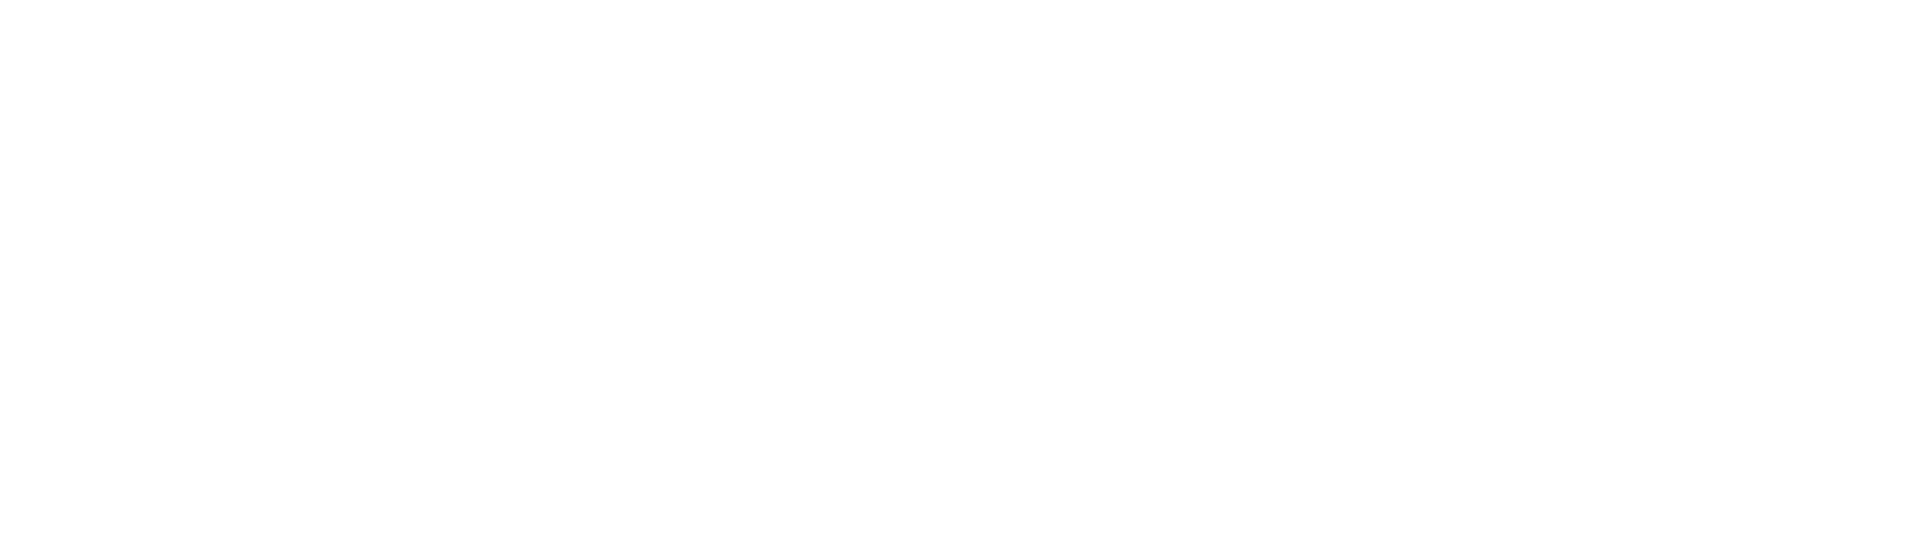 UC Davis Library Logo